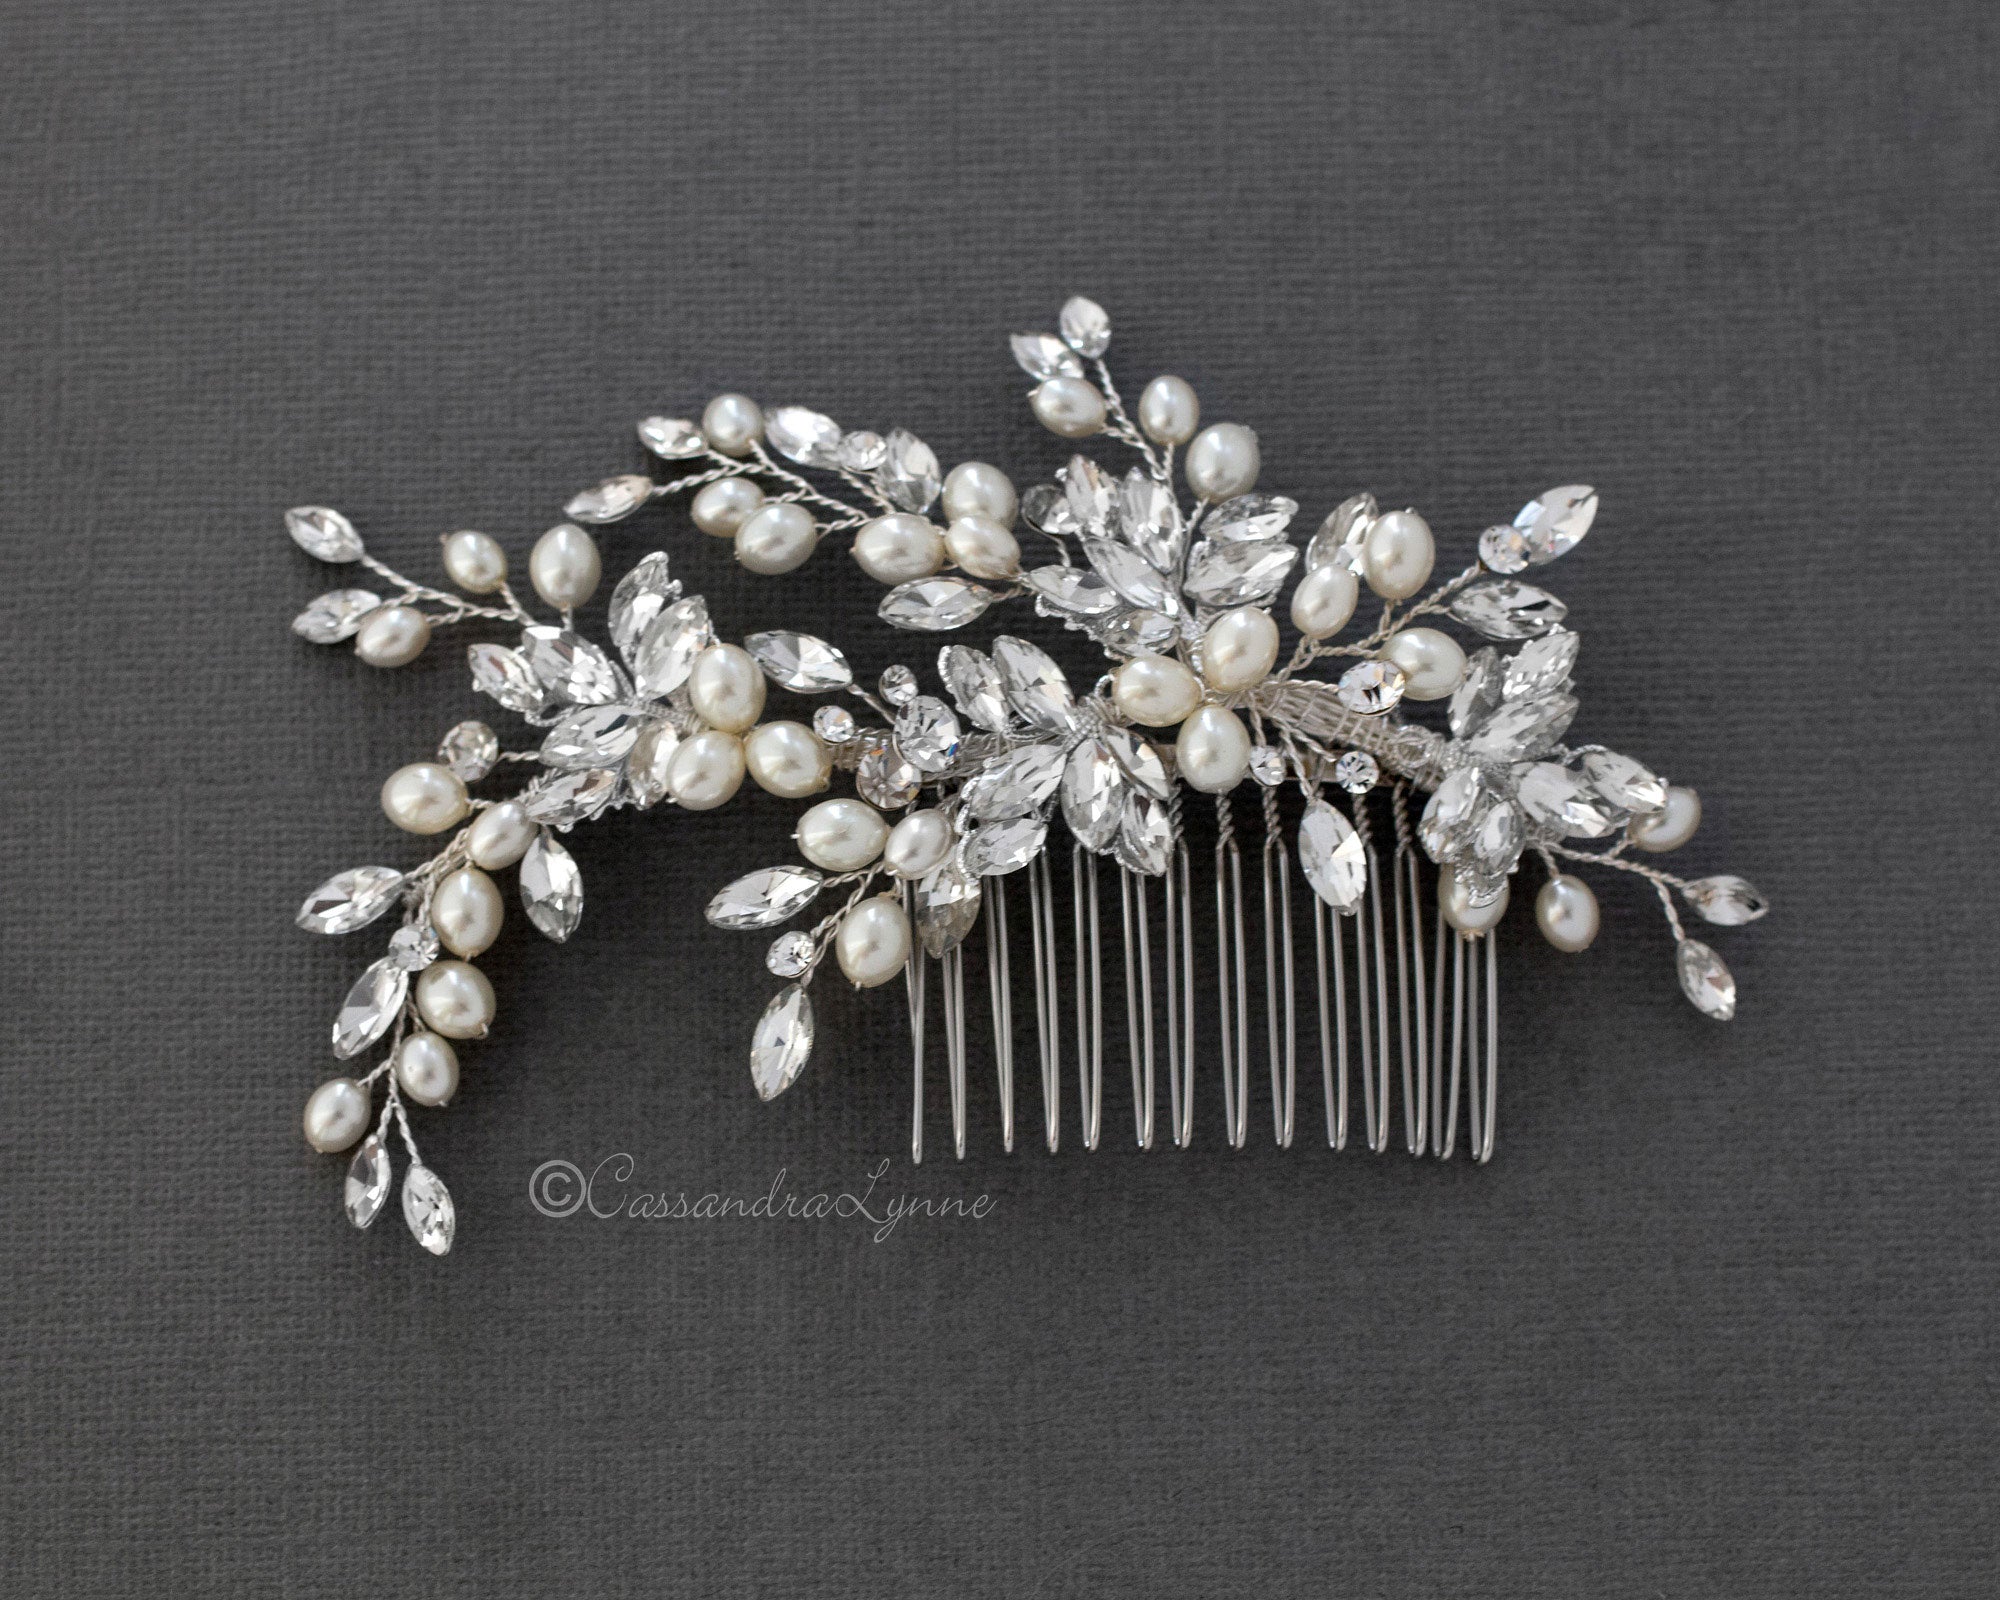 Oval Pearls Crystal Wedding Hair Comb - Cassandra Lynne